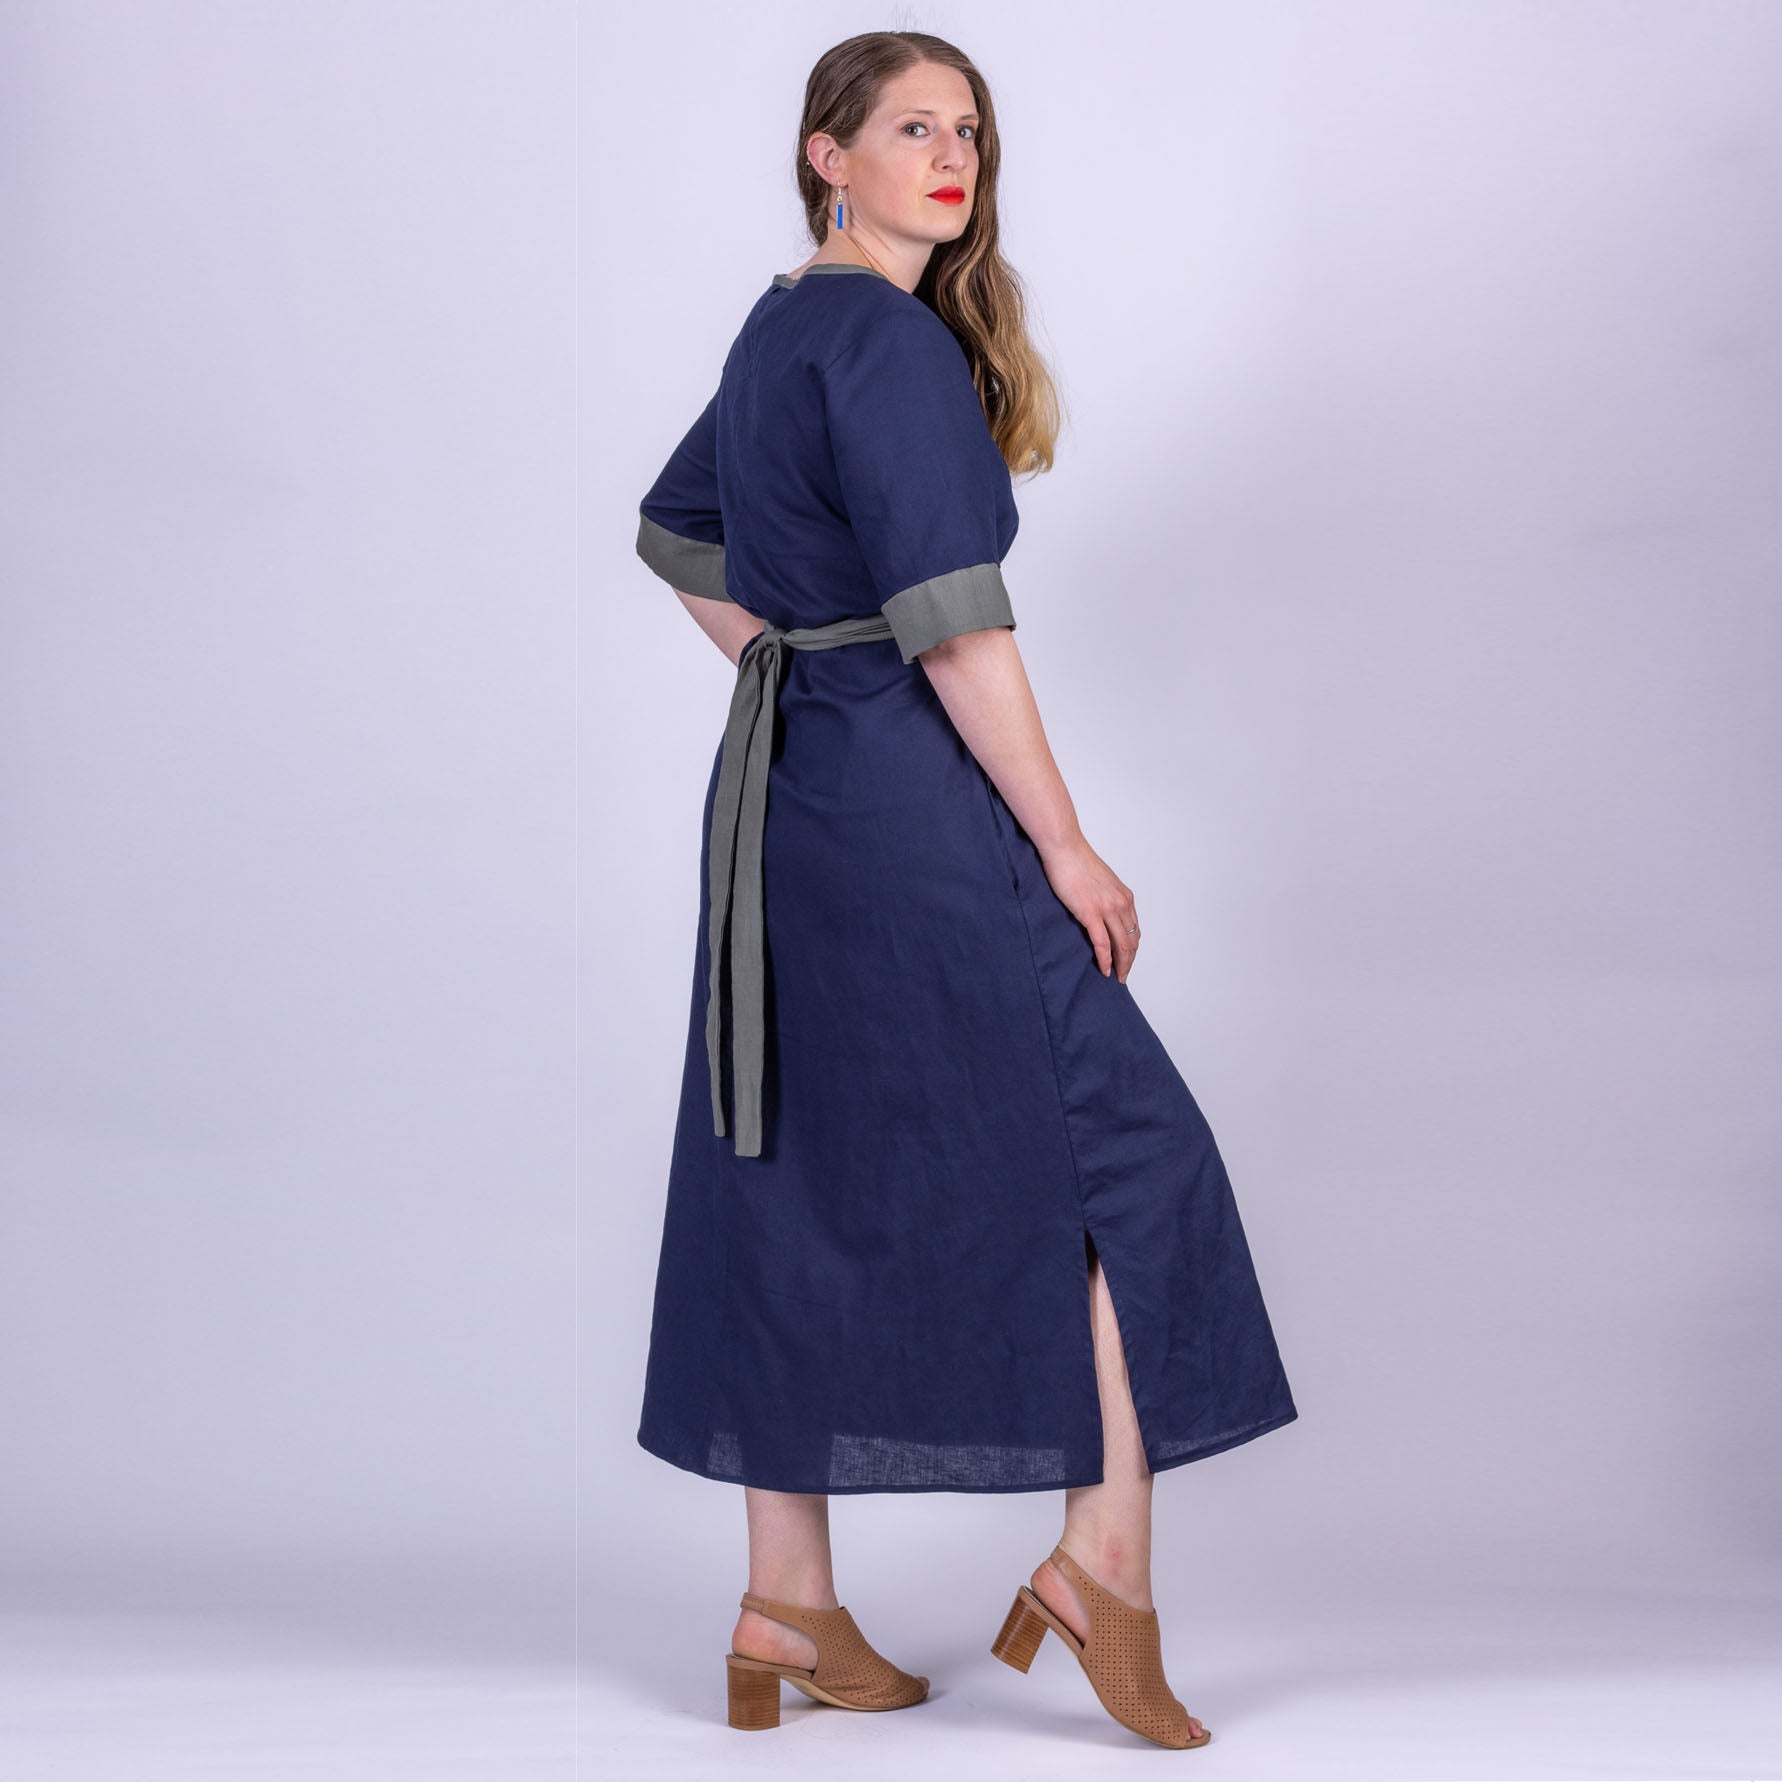 midi length linen dress from desiree clothing